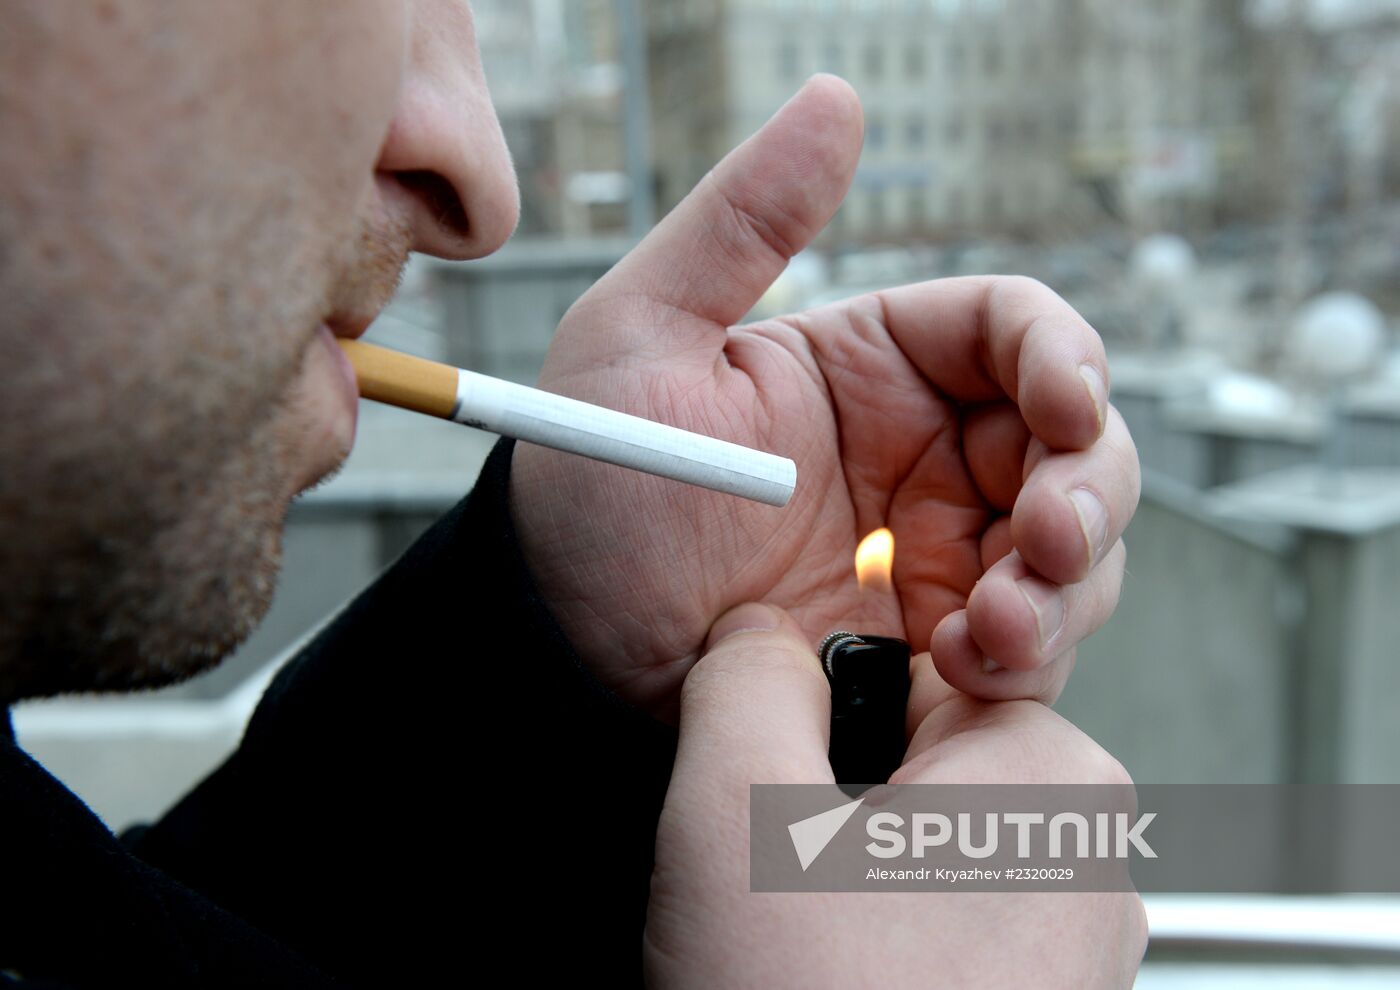 Smoking in public areas